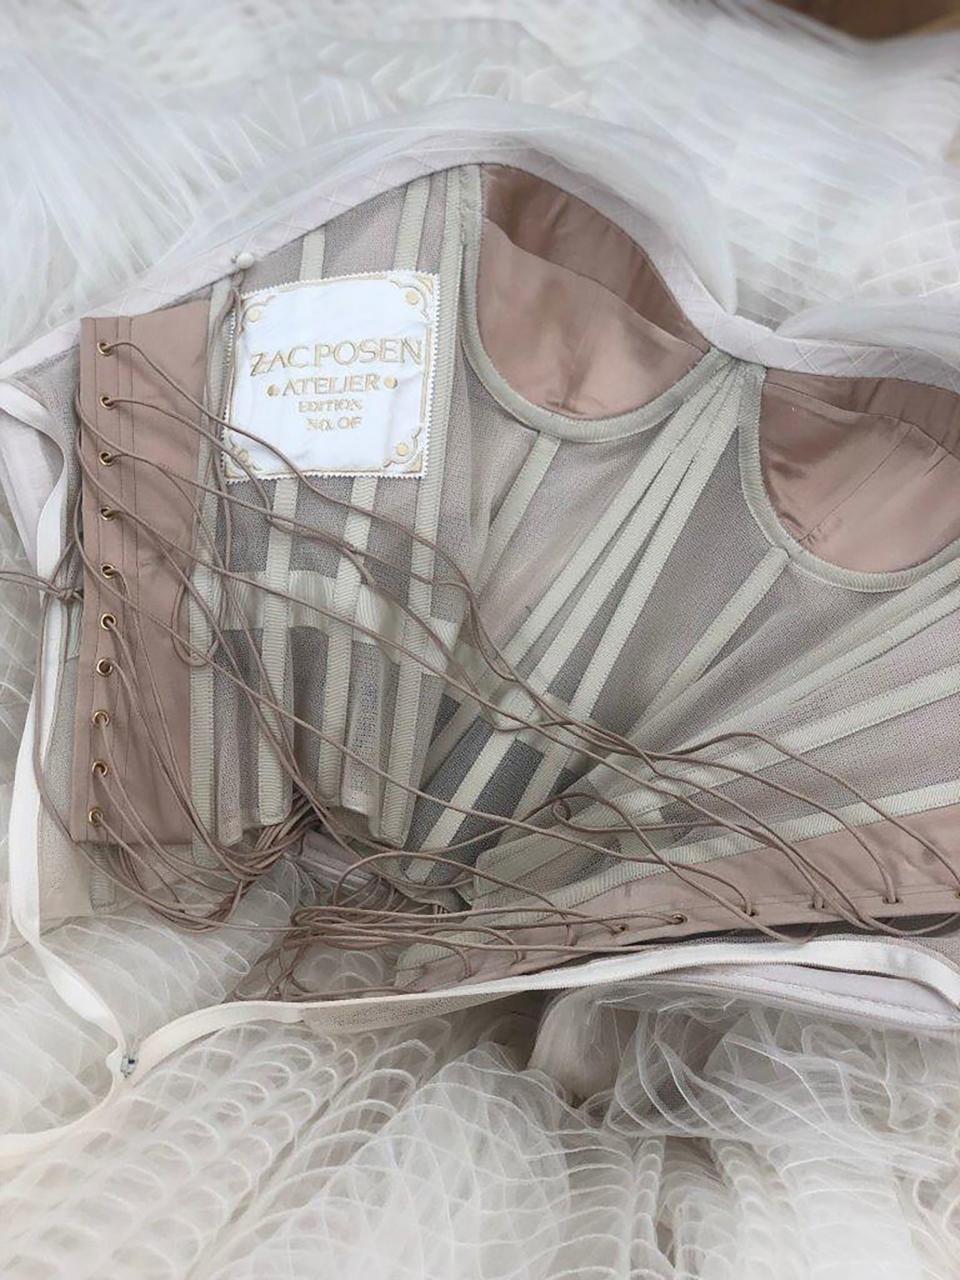 The boning inside the corseted bodice of Katharine McPhee’s custom Zac Posen wedding dress.